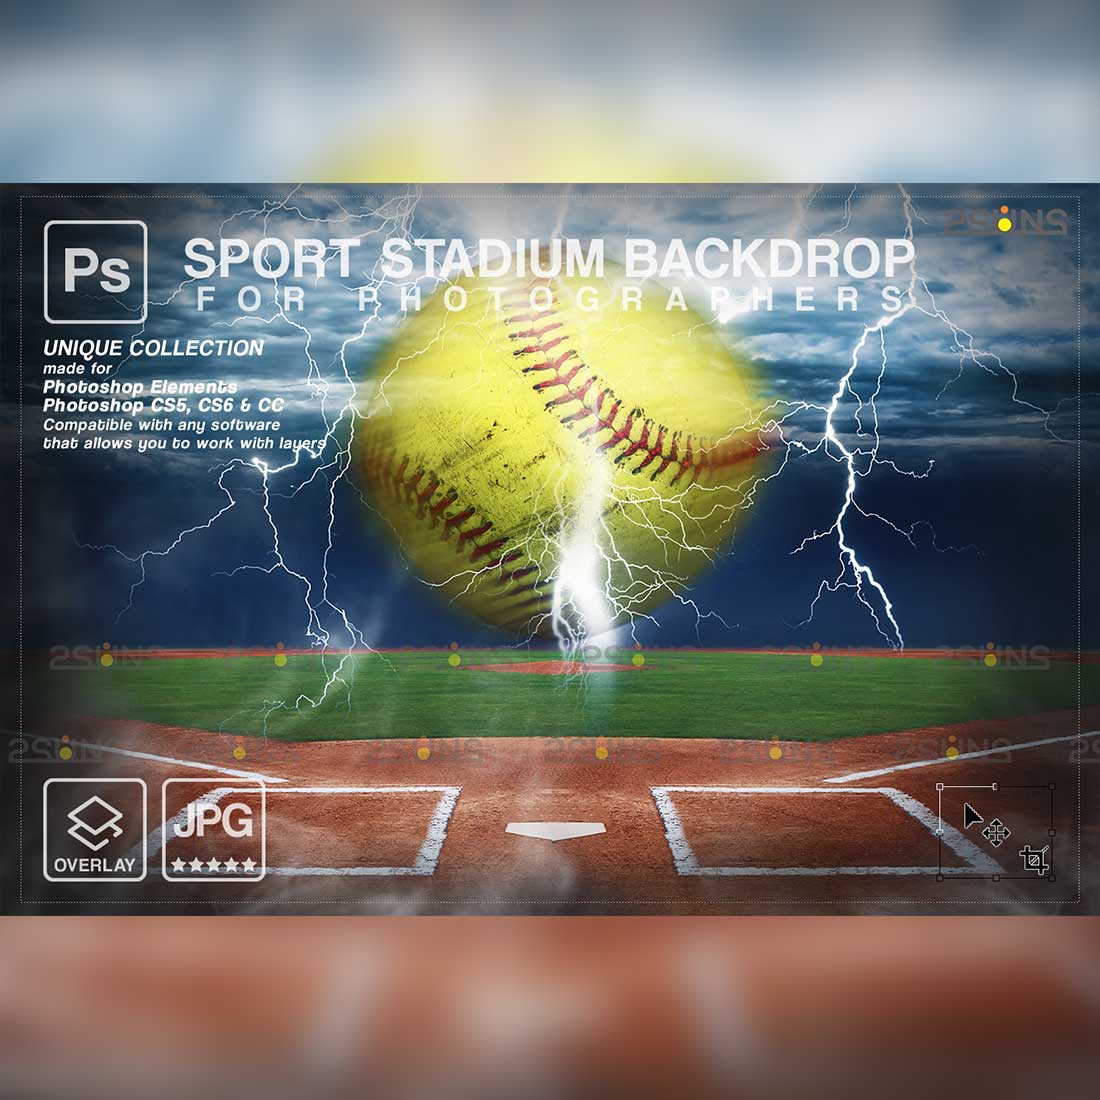 Softball Backdrop Sports Digital Preview Image.